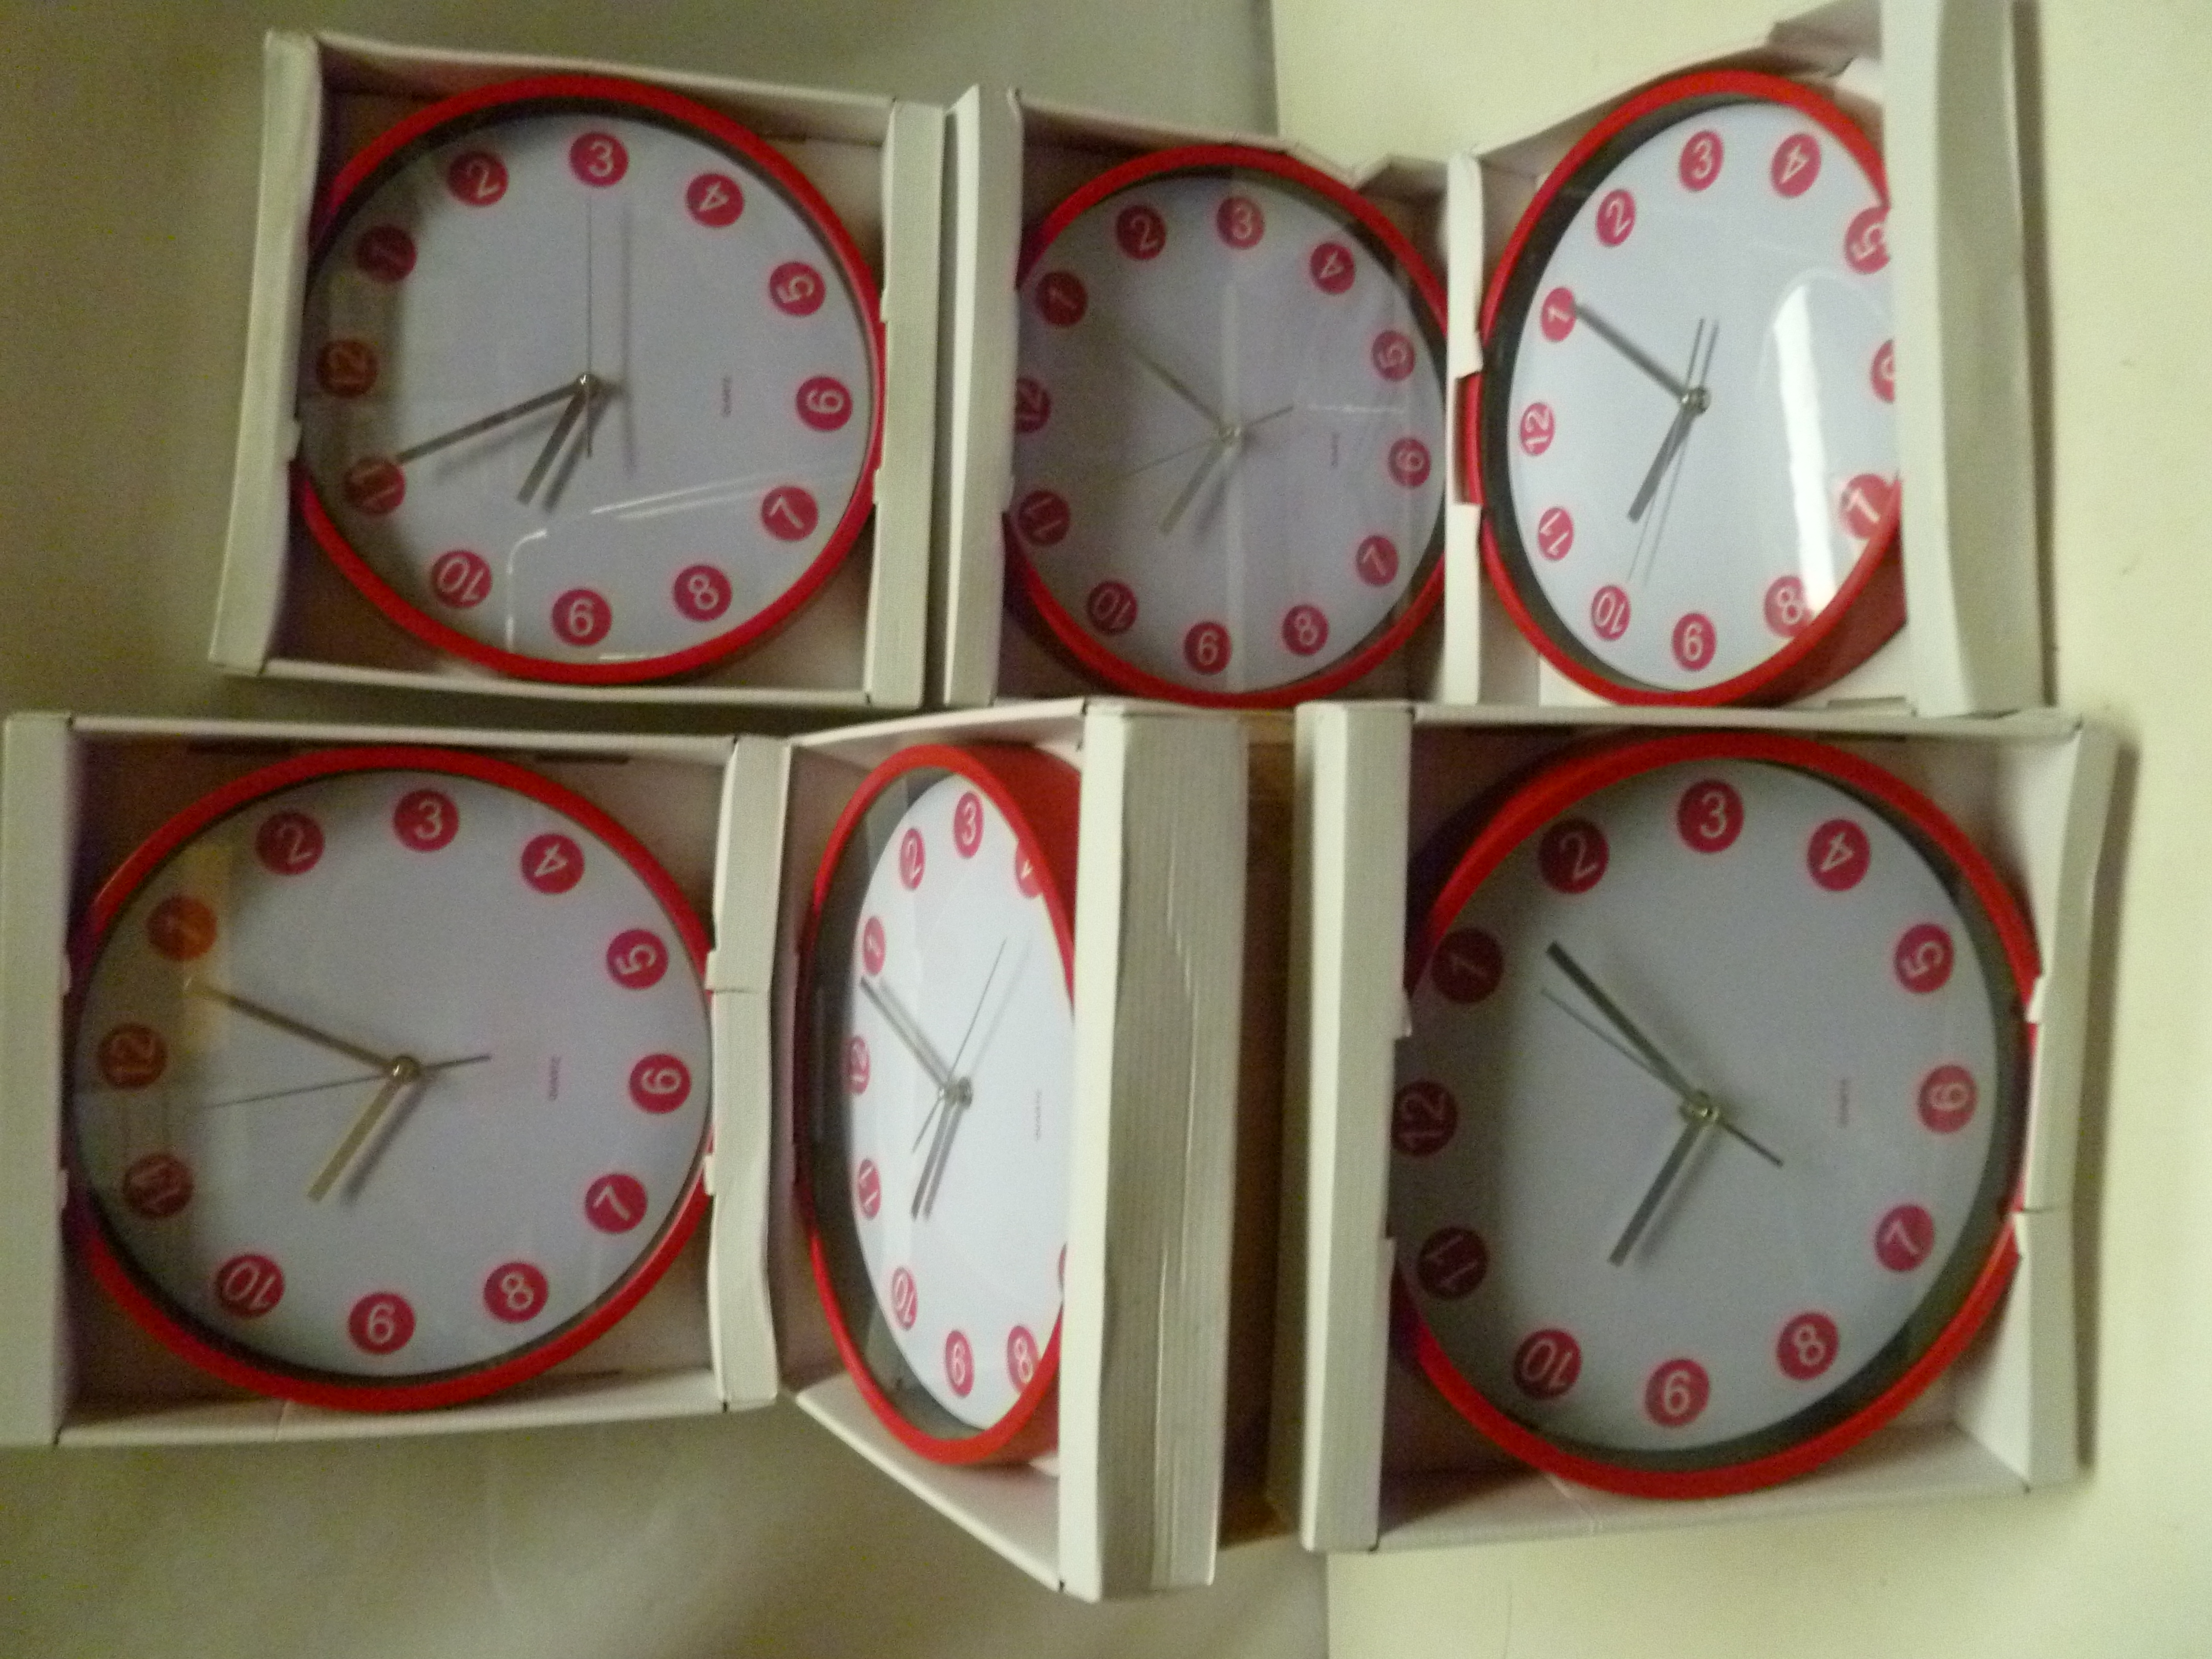 5 x Round Red Clocks Wholesale job Lot New